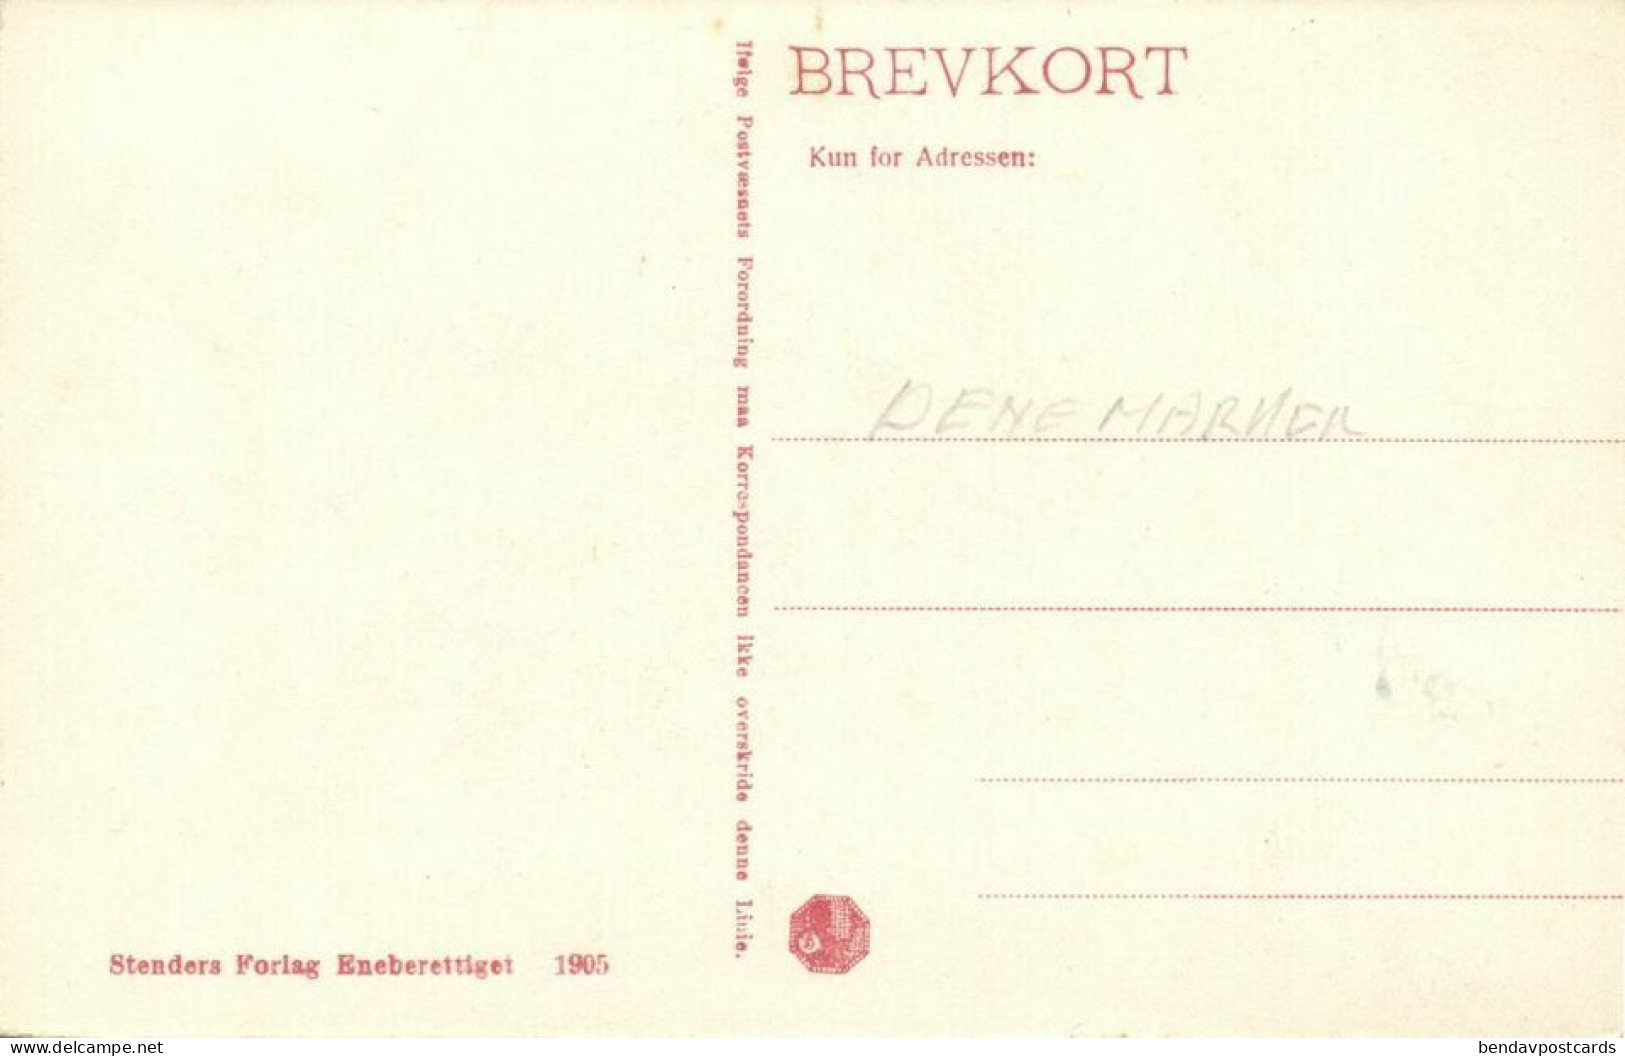 Denmark, ESBJERG, Banegaarden, Railway Station (1910s) Postcard - Danemark